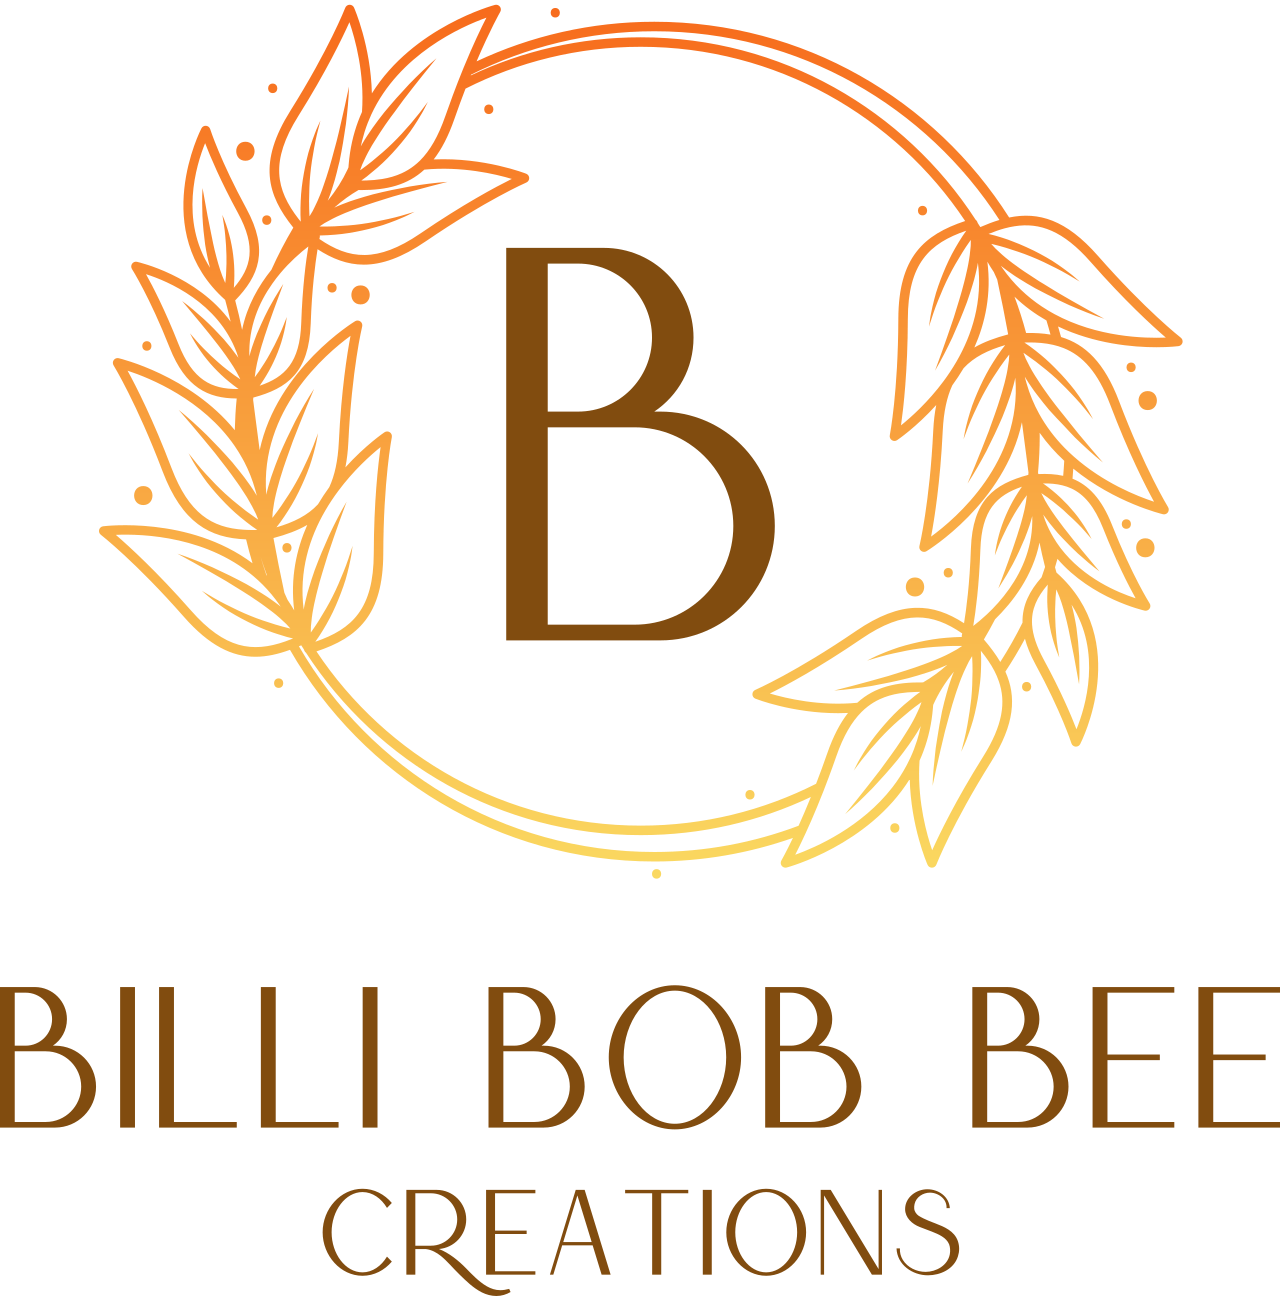 Billi Bob Bee's web page